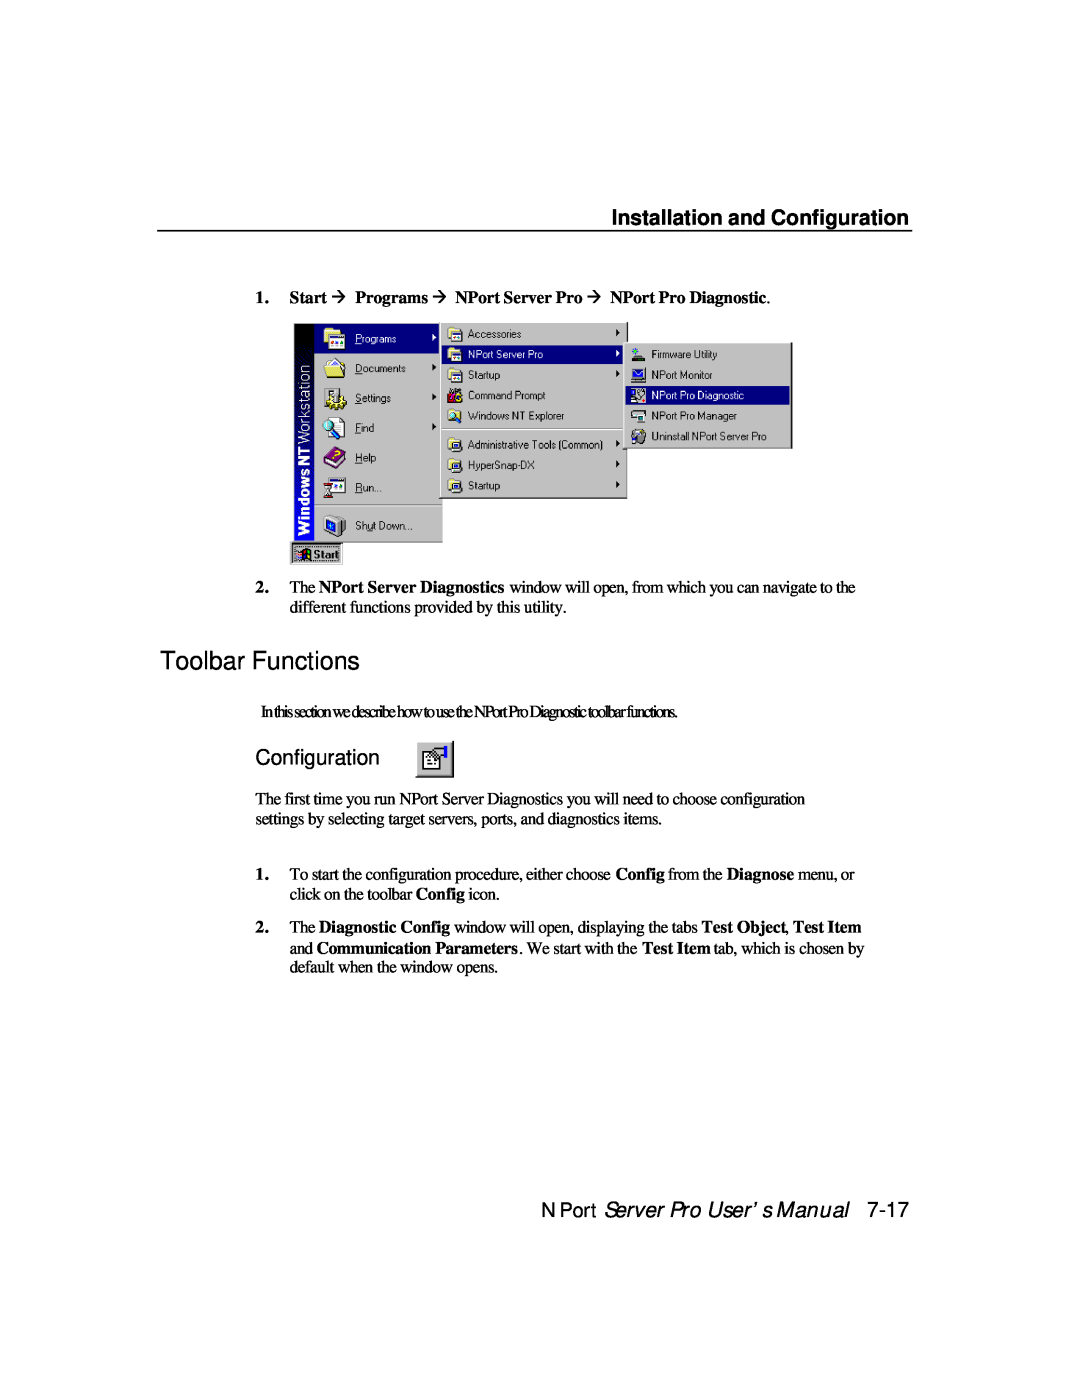 Moxa Technologies DE-308, DE-303 Toolbar Functions, Installation and Configuration, NPort Server Pro User’s Manual 